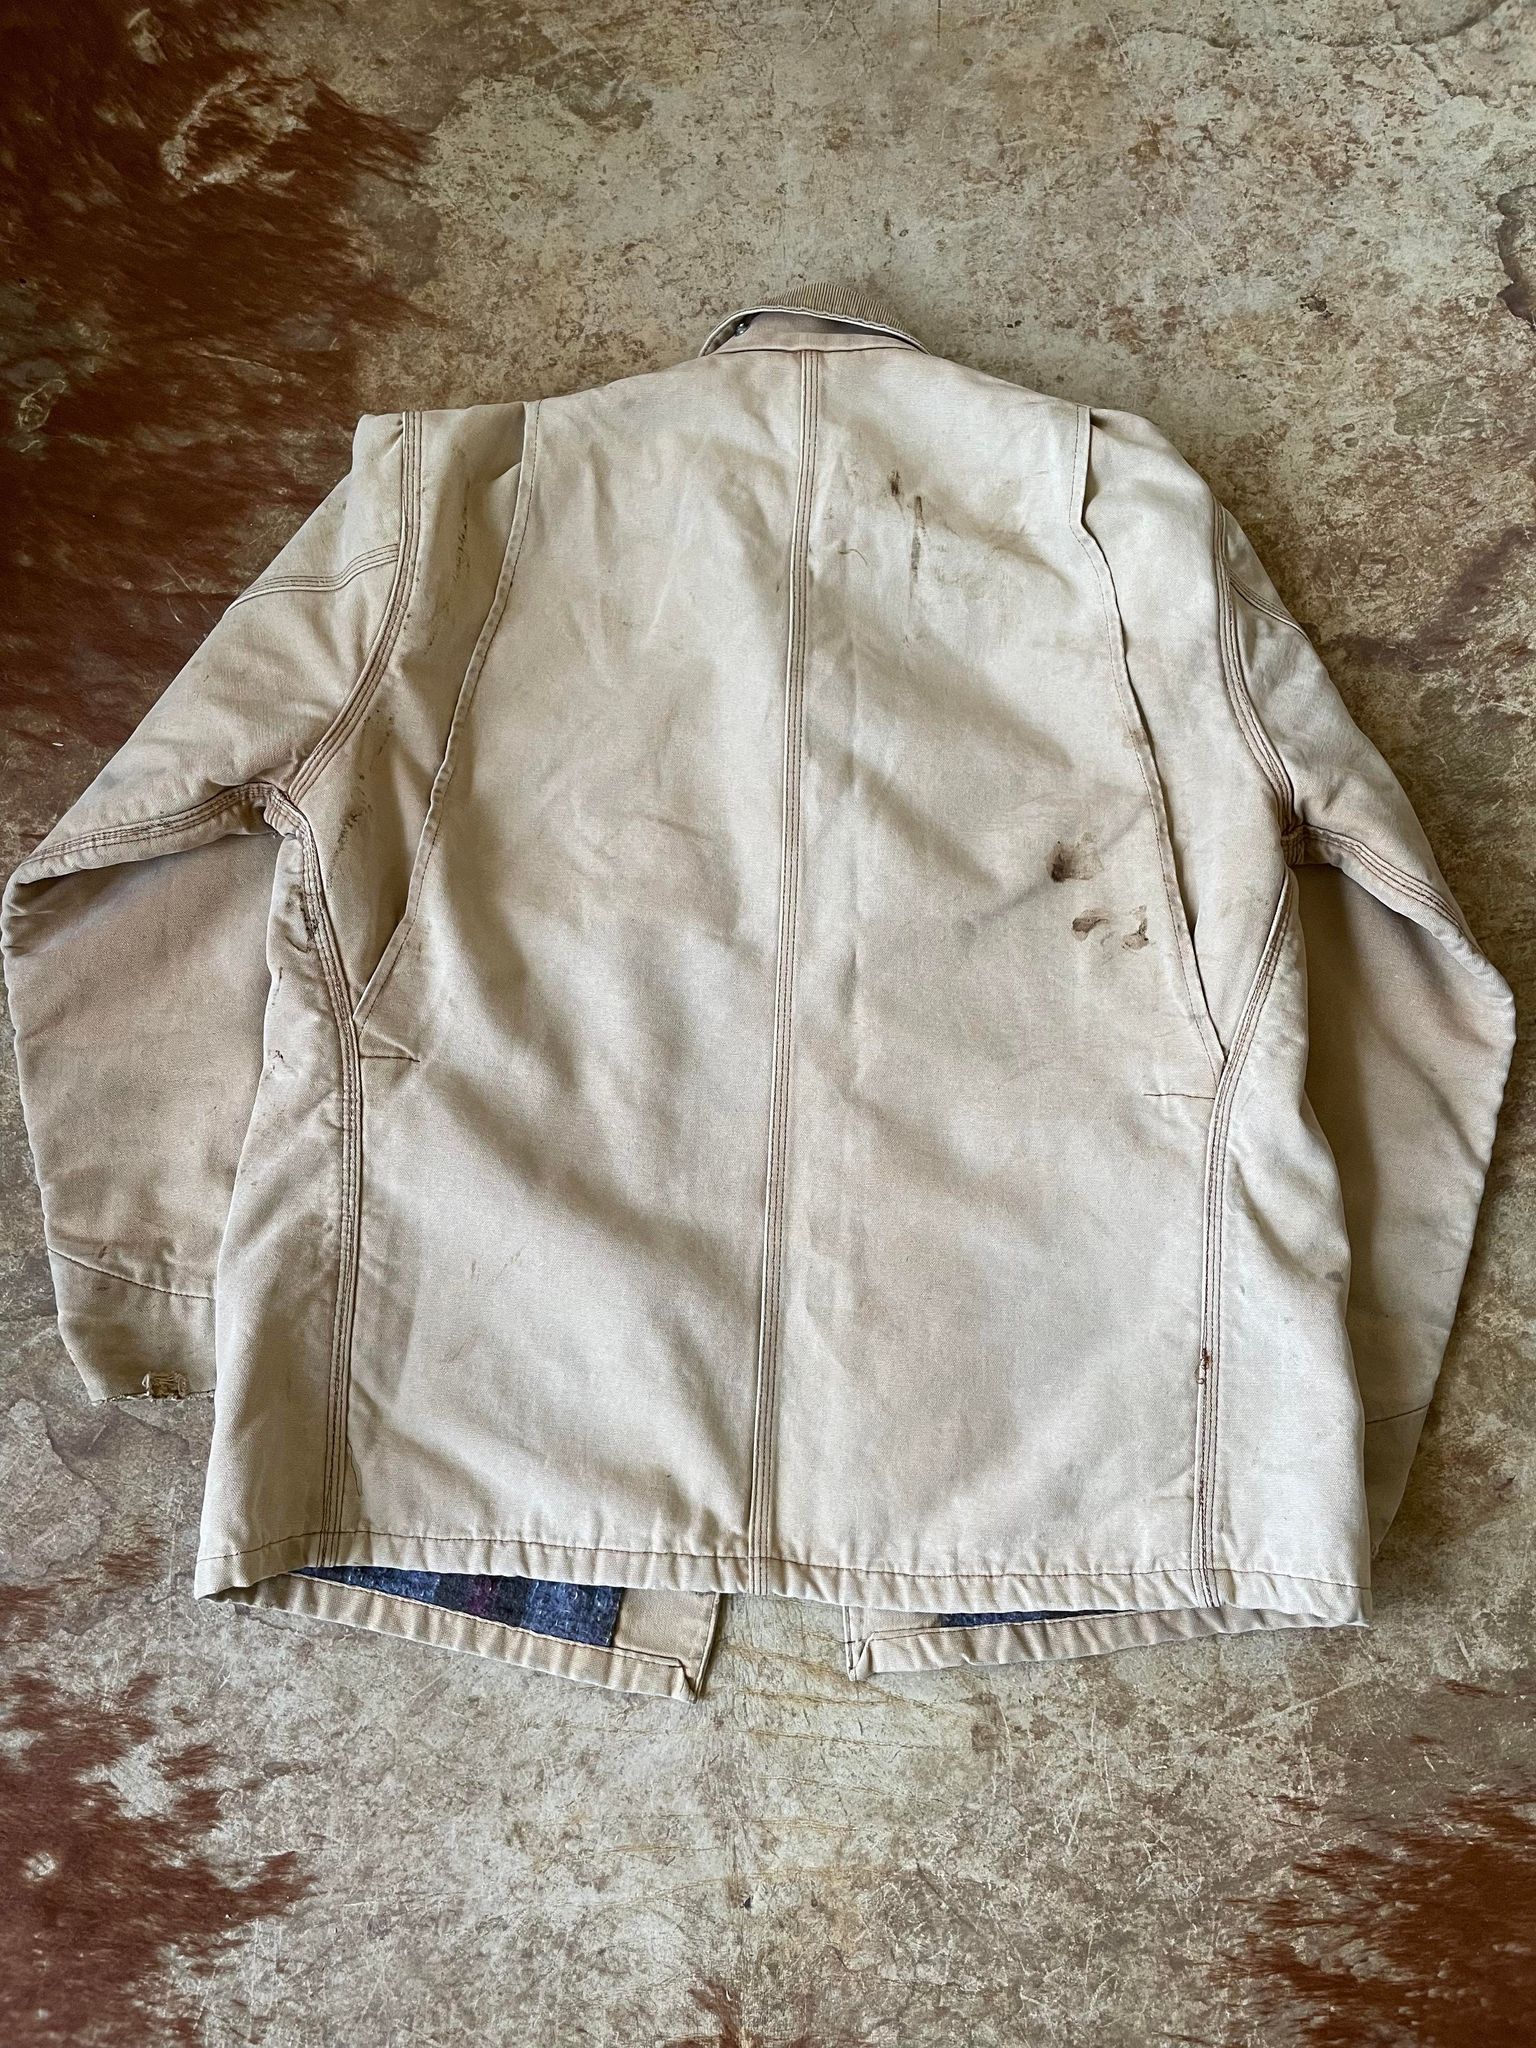 Vintage Carhartt Chore Jacket